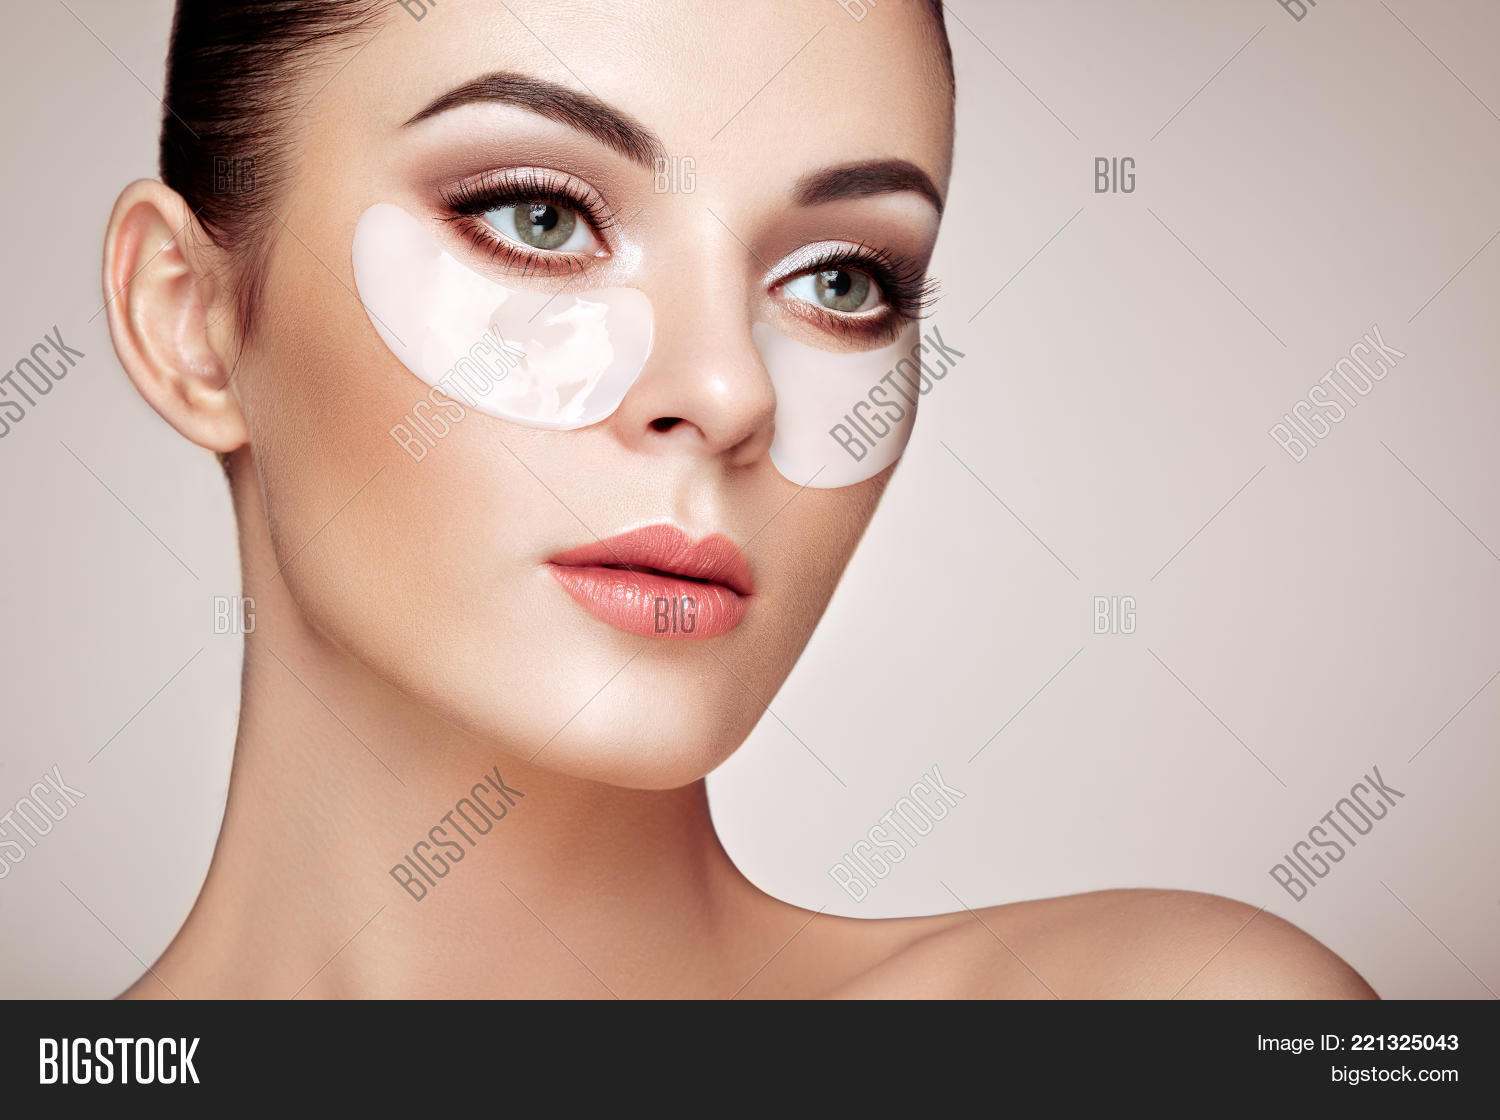 White Makeup Under Eyes Portrait Beauty Woman Image Photo Free Trial Bigstock